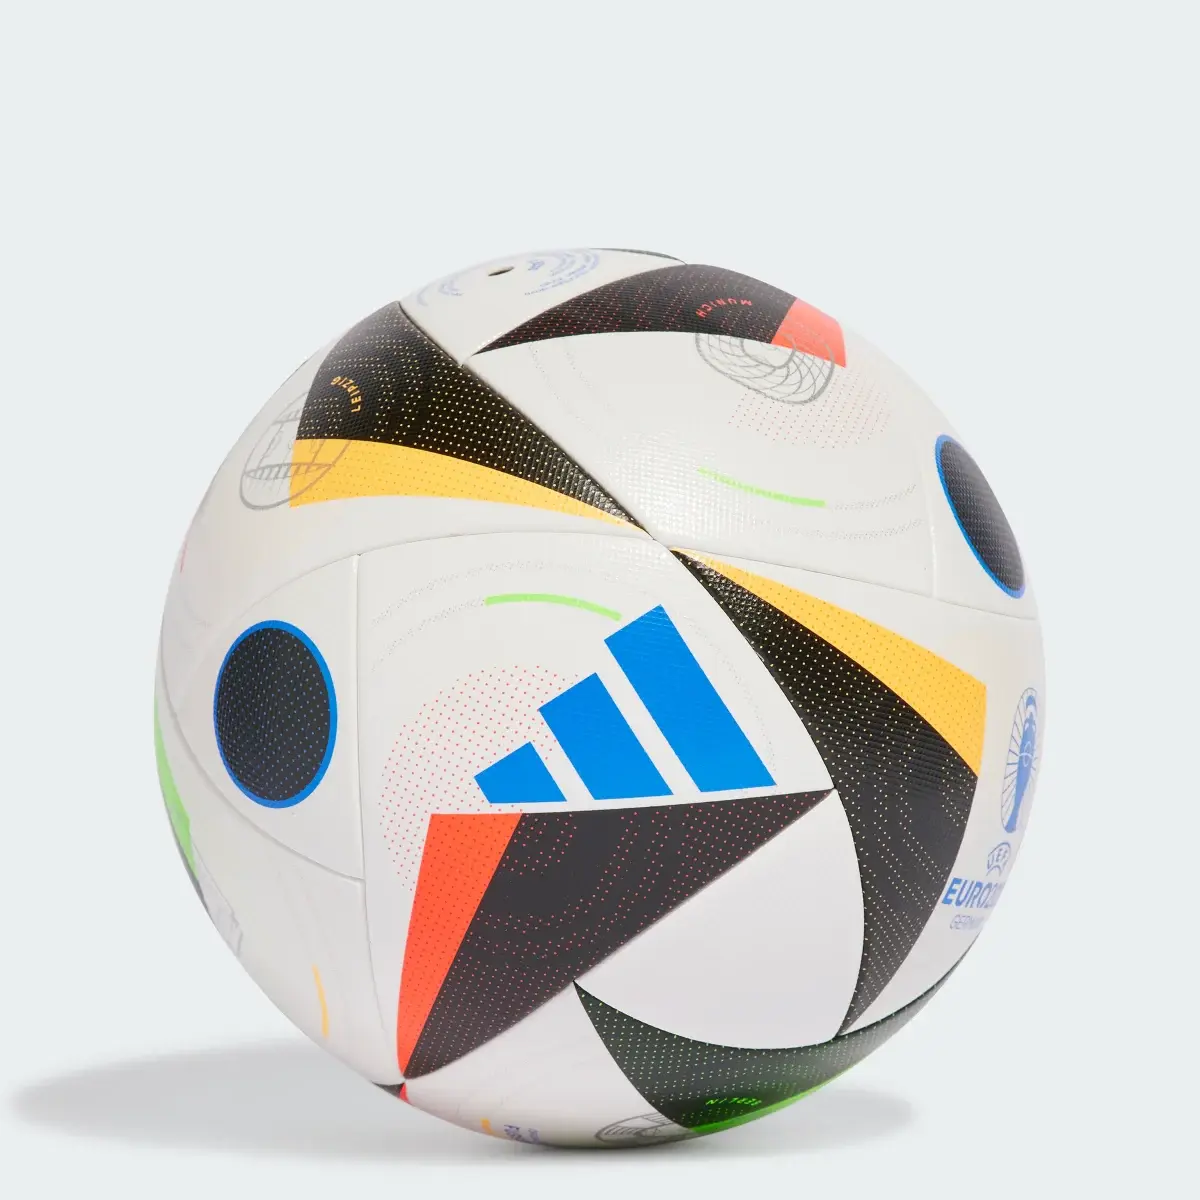 Adidas Fussballliebe Competition Ball. 1